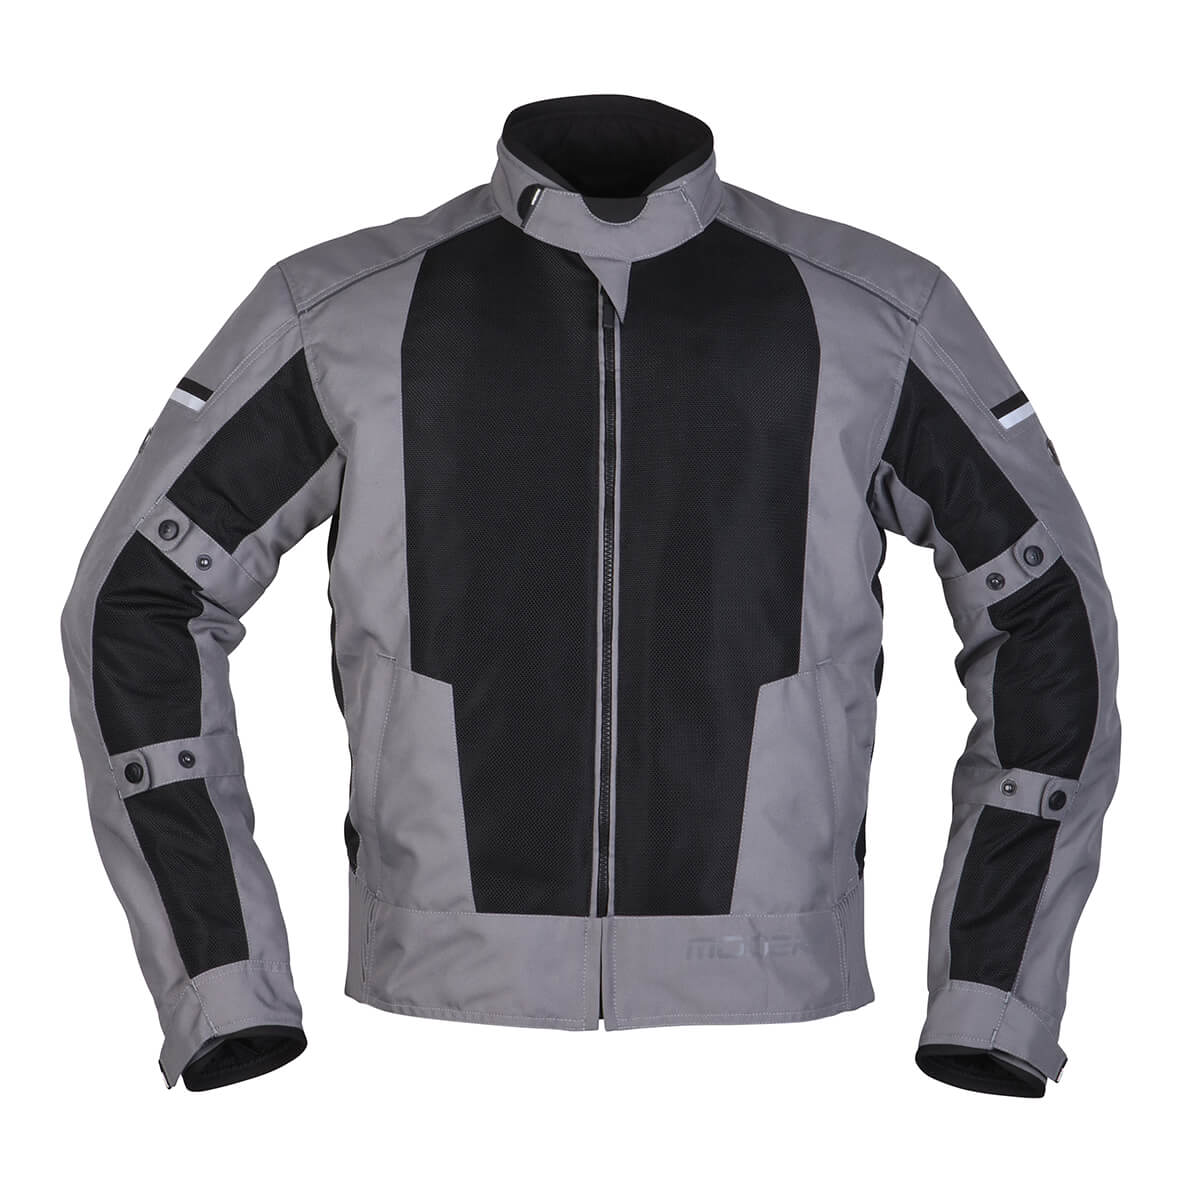 Image of Modeka Veo Air Jacket Black Gray Size 3XL ID 4045765189887